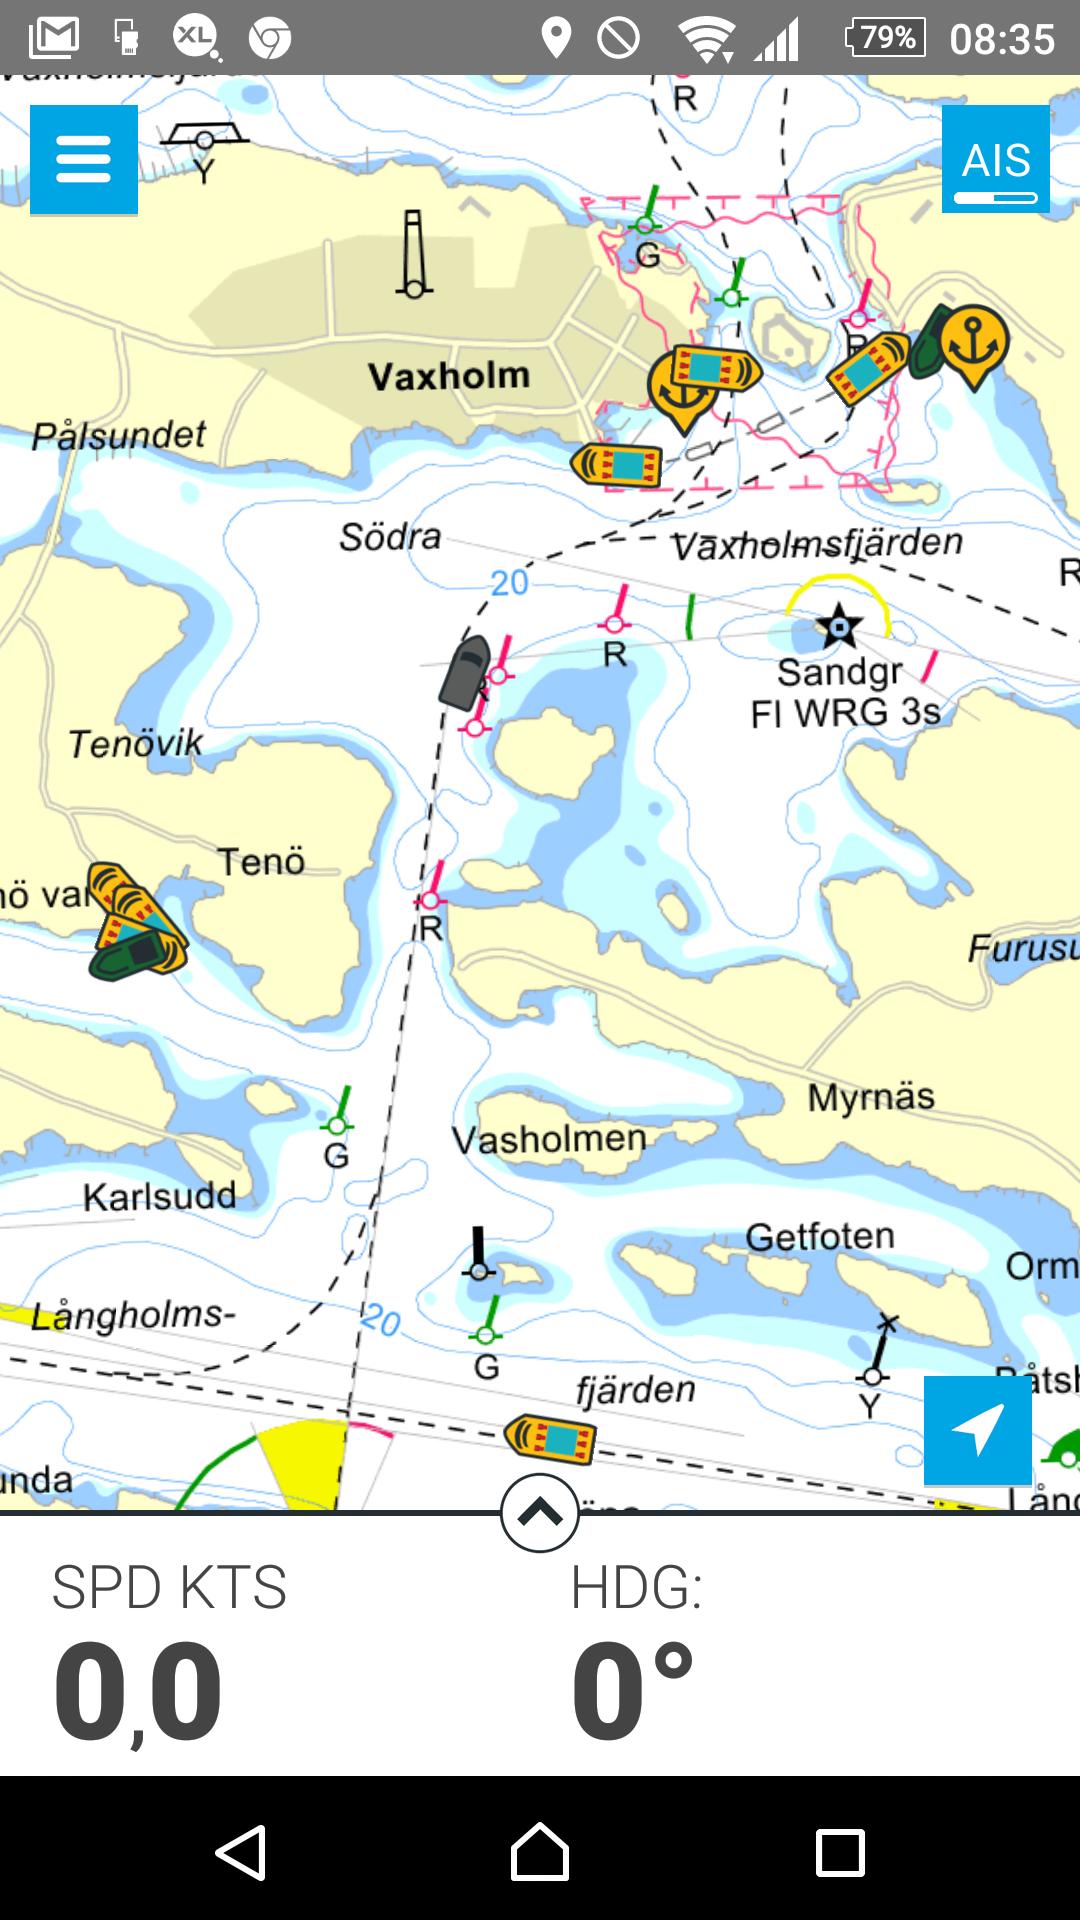 Eniro På sjön - Gratis sjökort for Android - APK Download